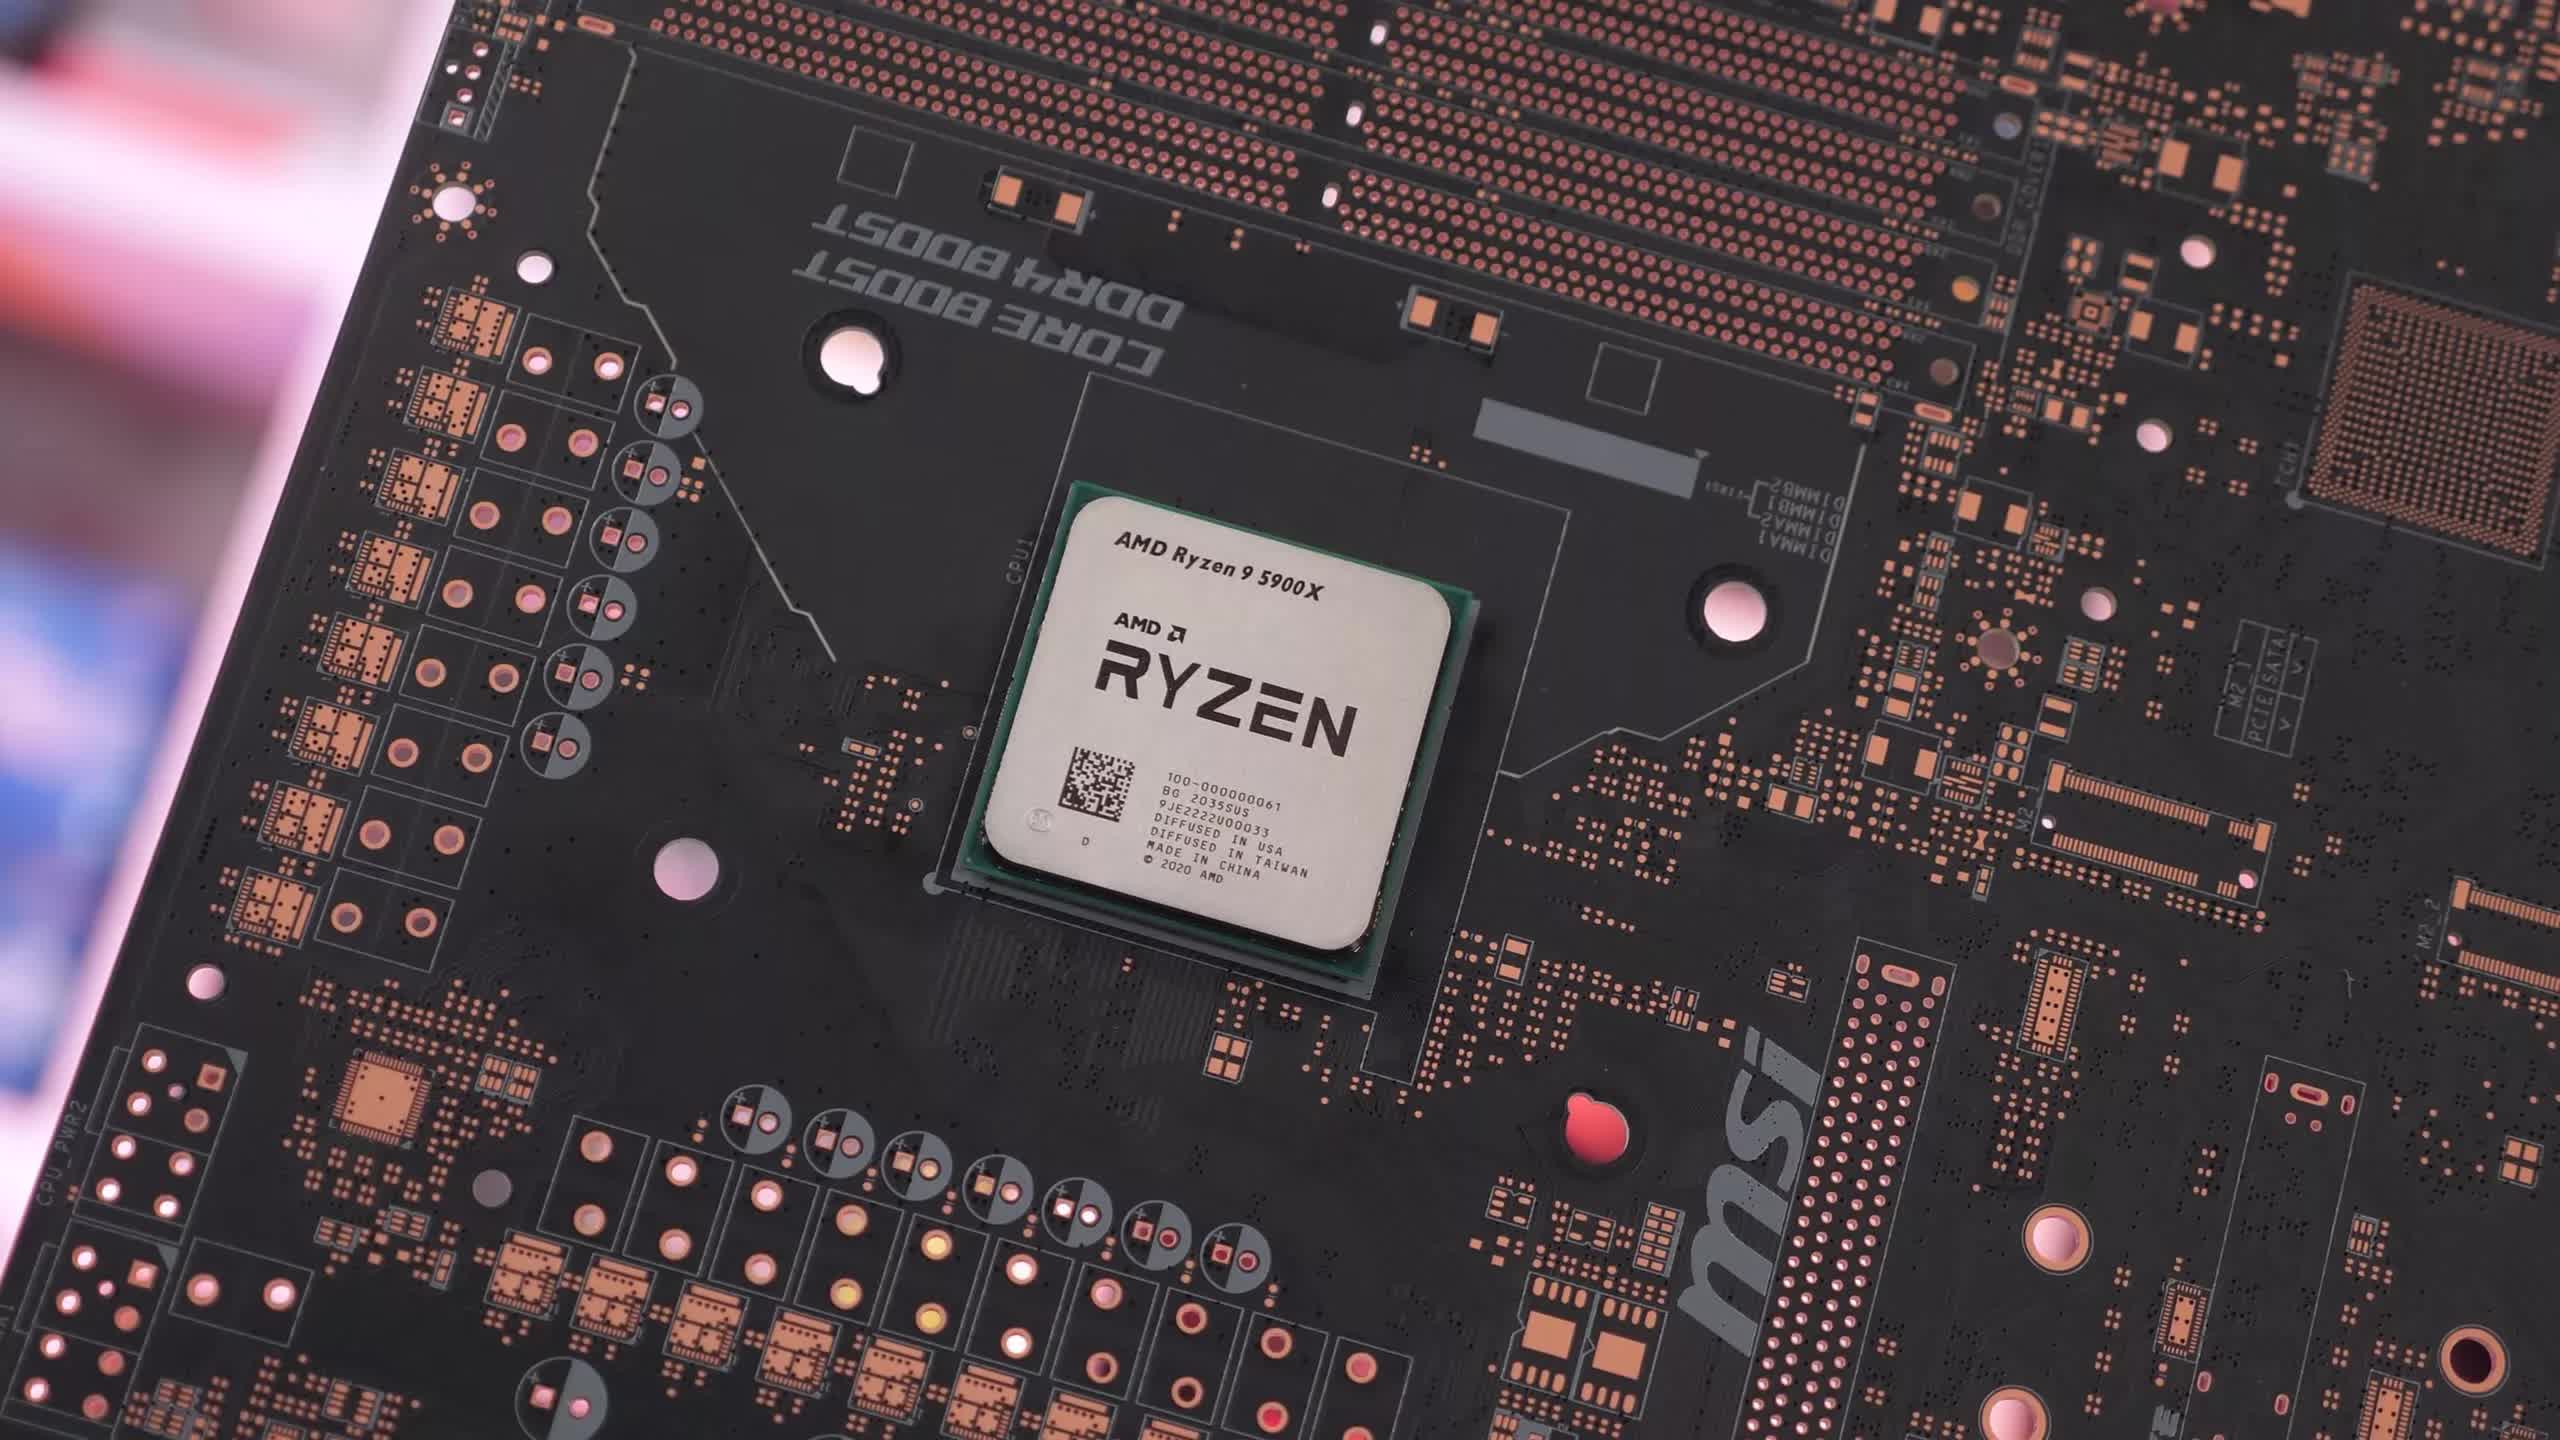 New leak reveals upcoming Ryzen 5000G APU specifications